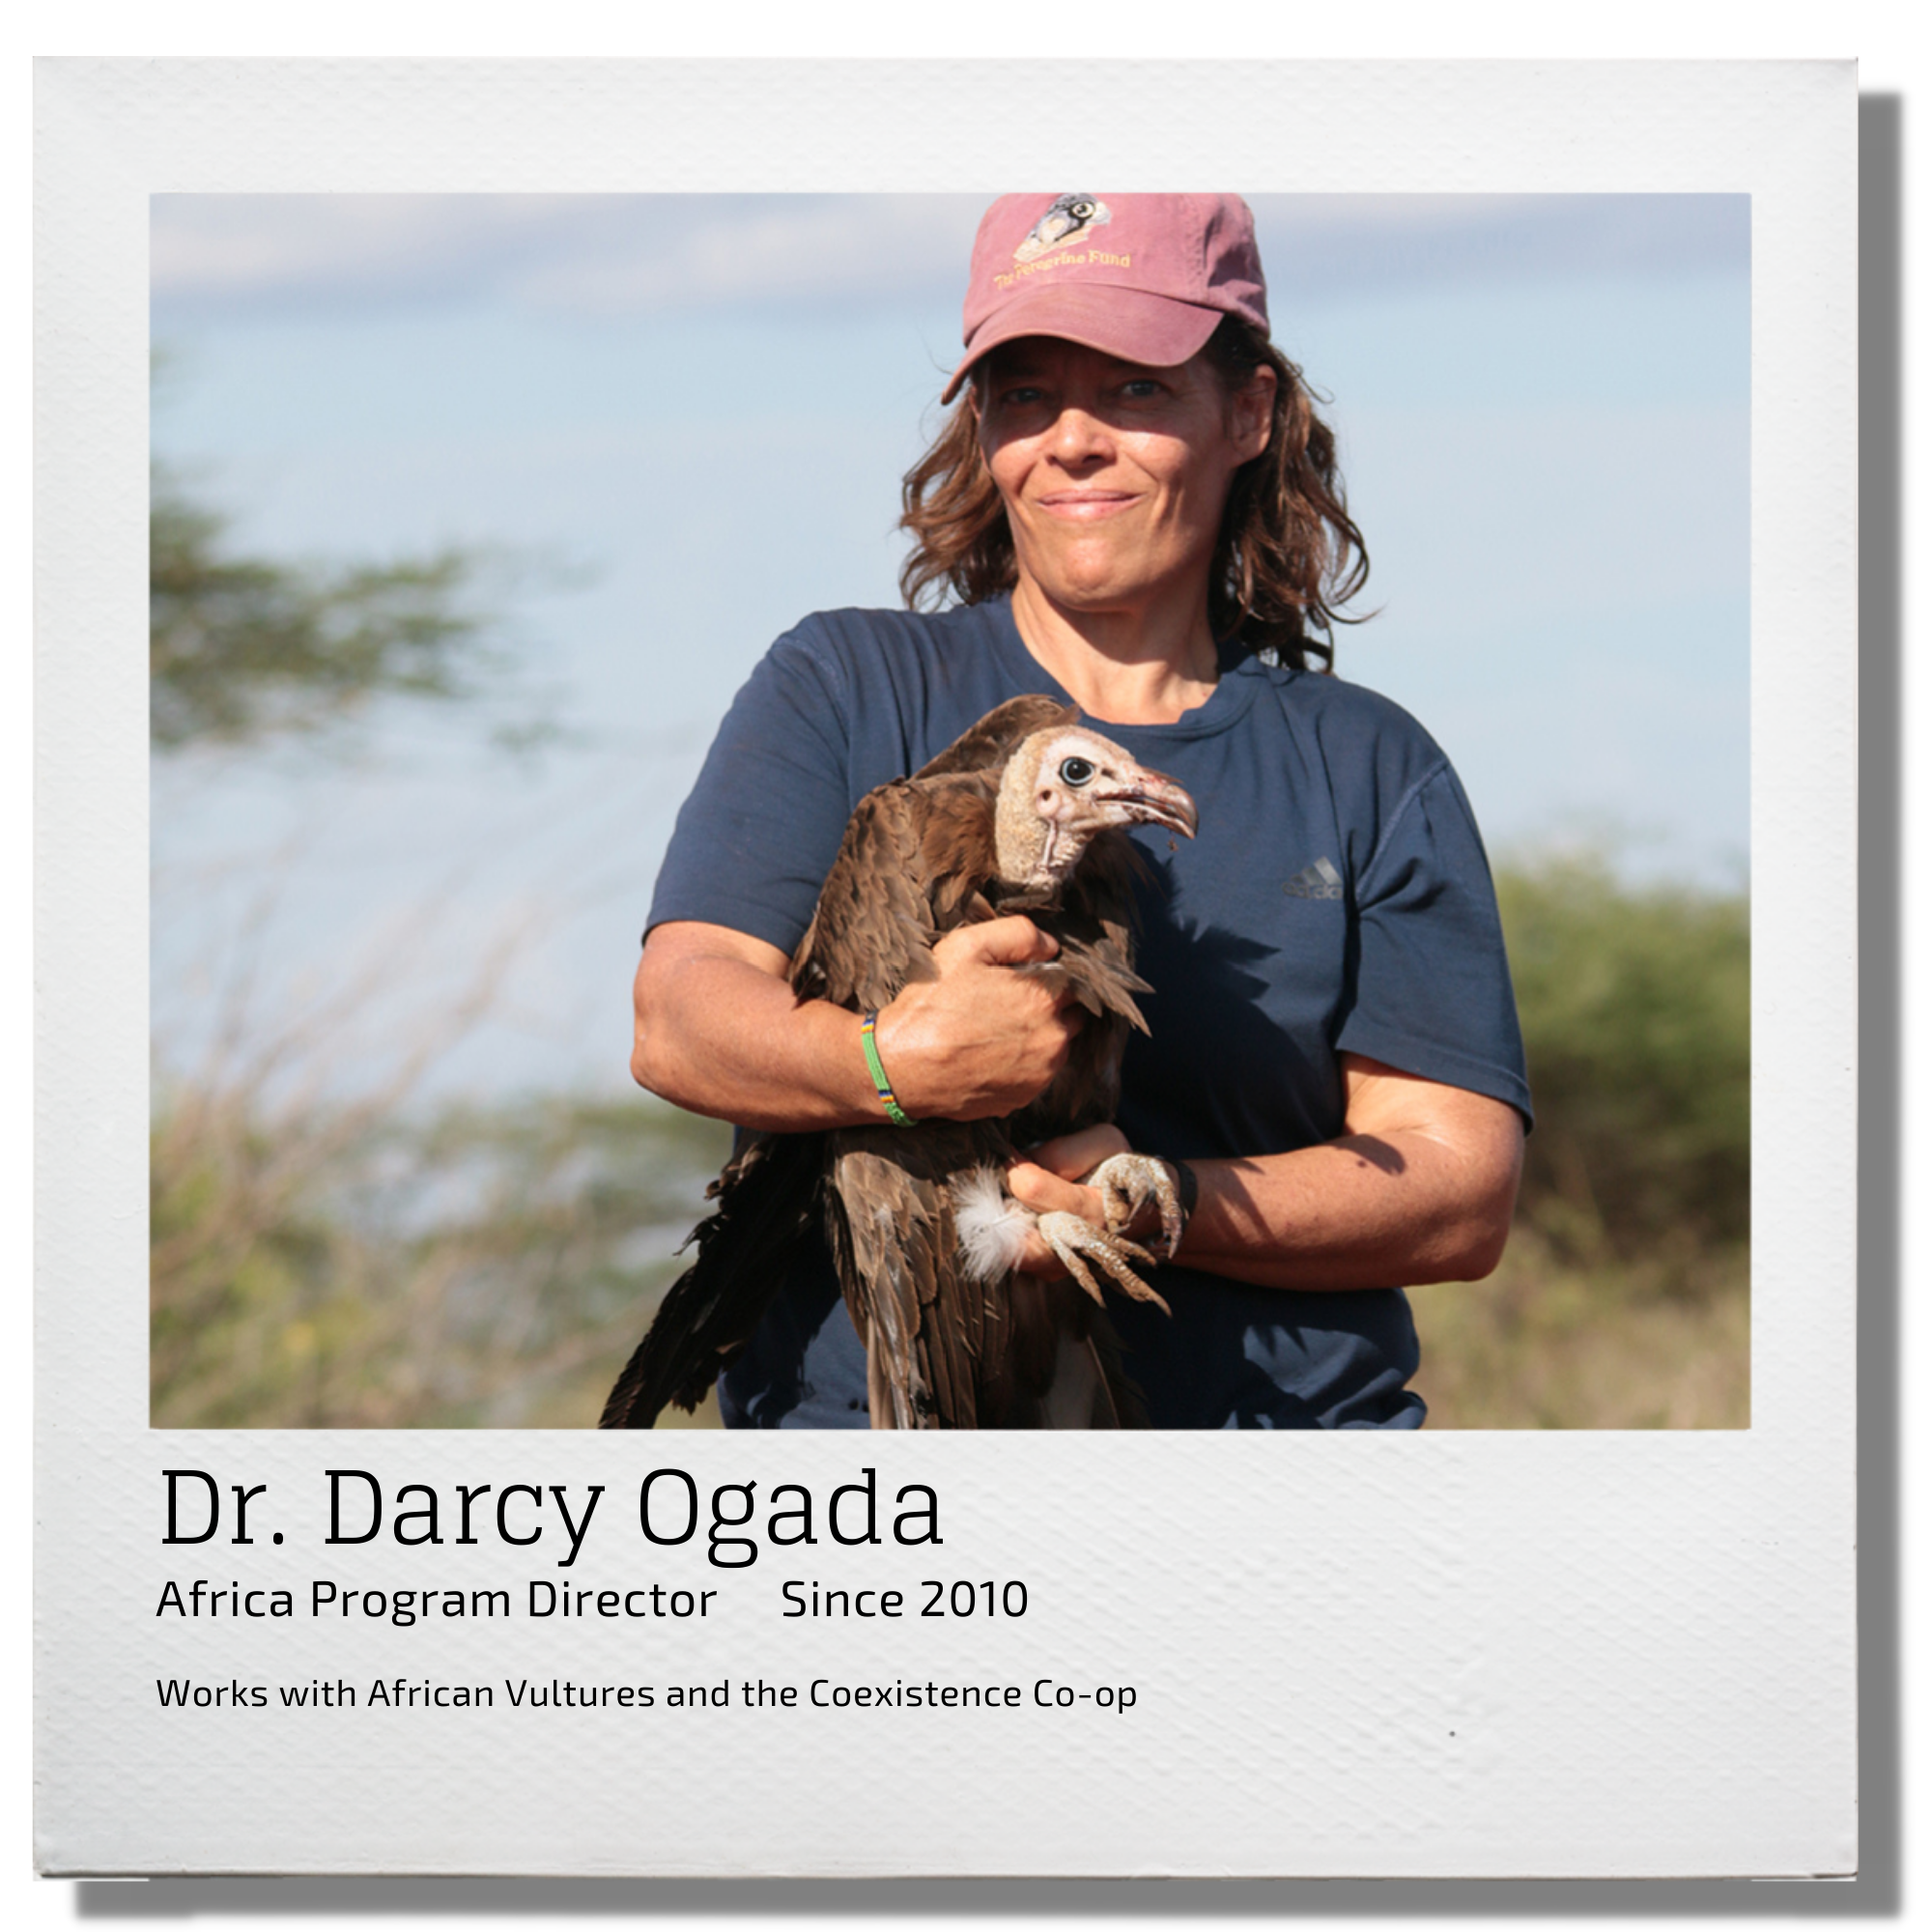 Dr. Darcy Ogada, Africa Program Director